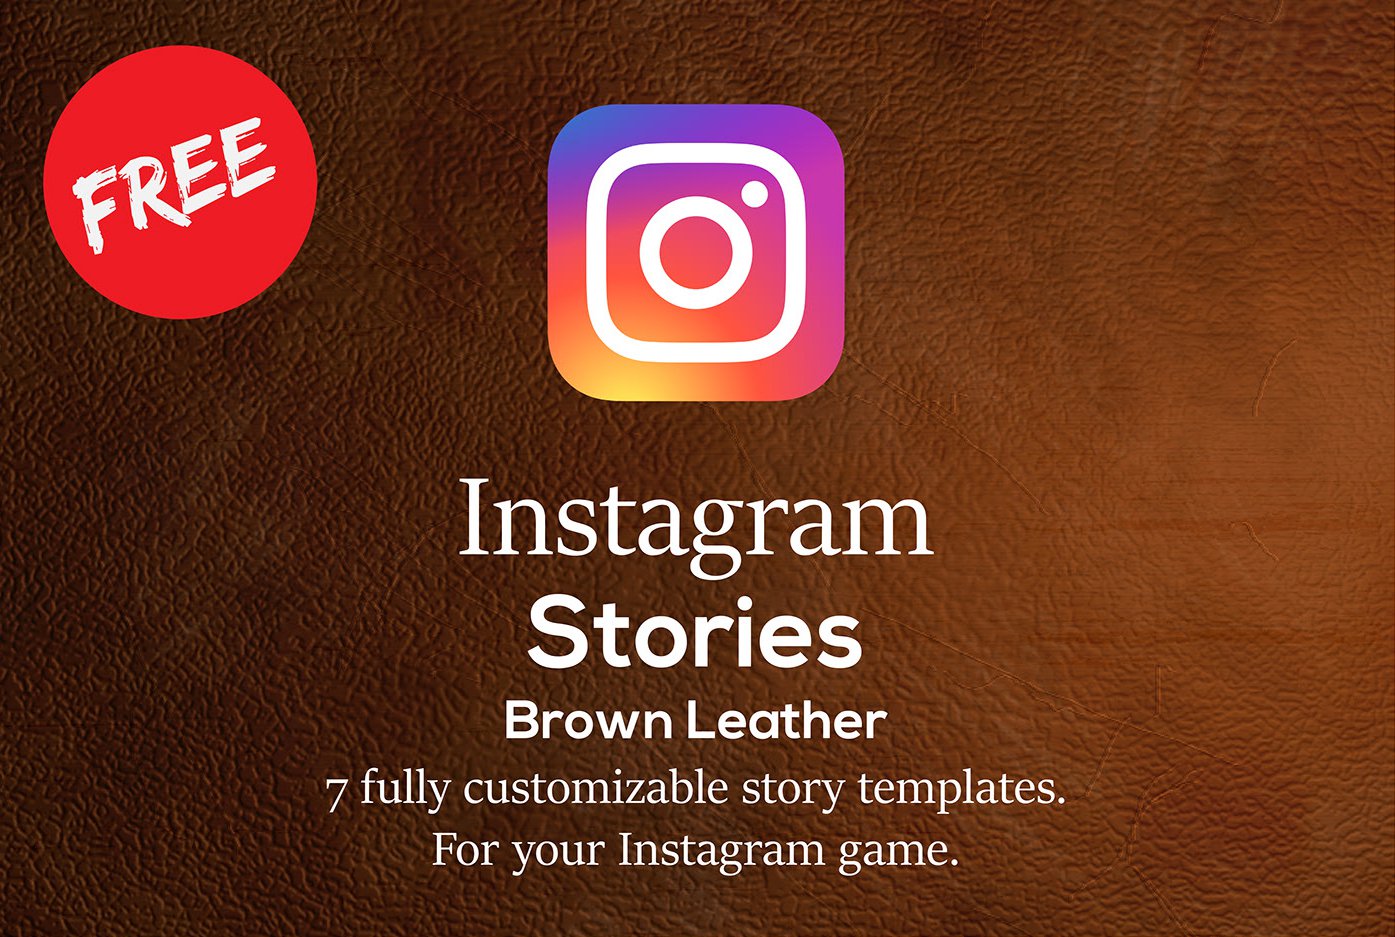 Instagram Stories Brown Leather set